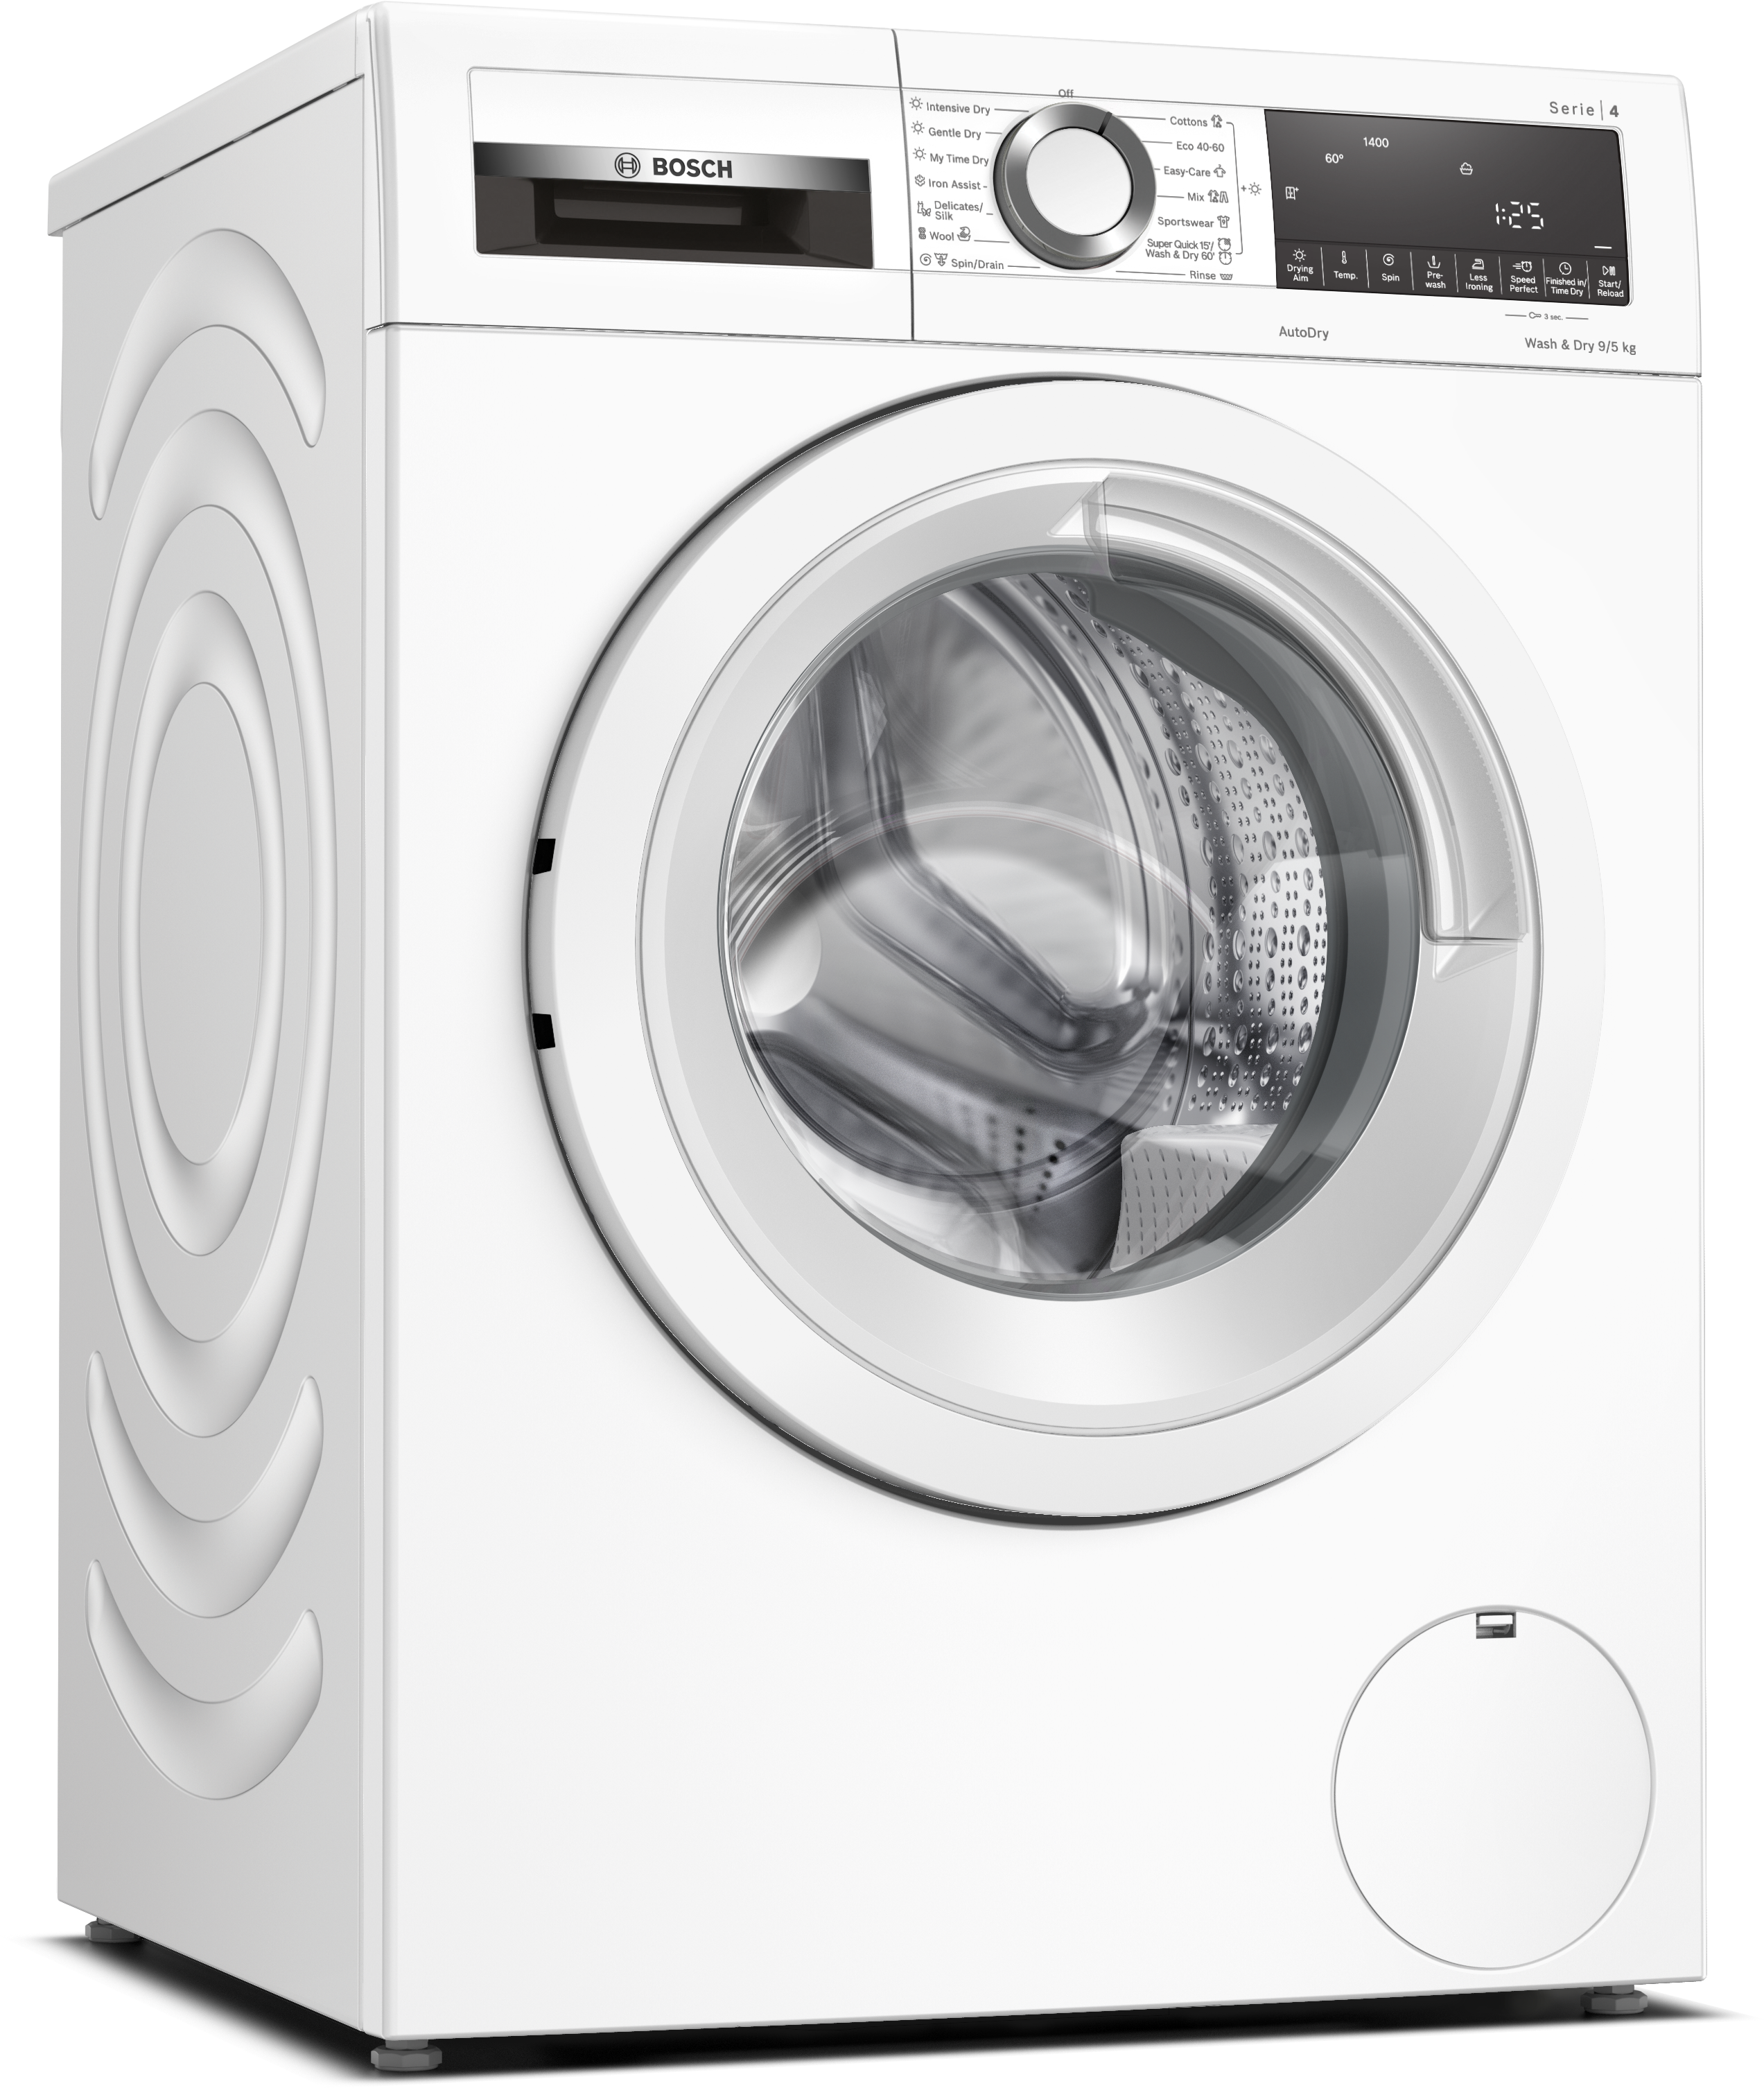 Serija 4, Mašina za pranje i sušenje veša, 9/5 kg, 1400 okr, WNA144V0BY